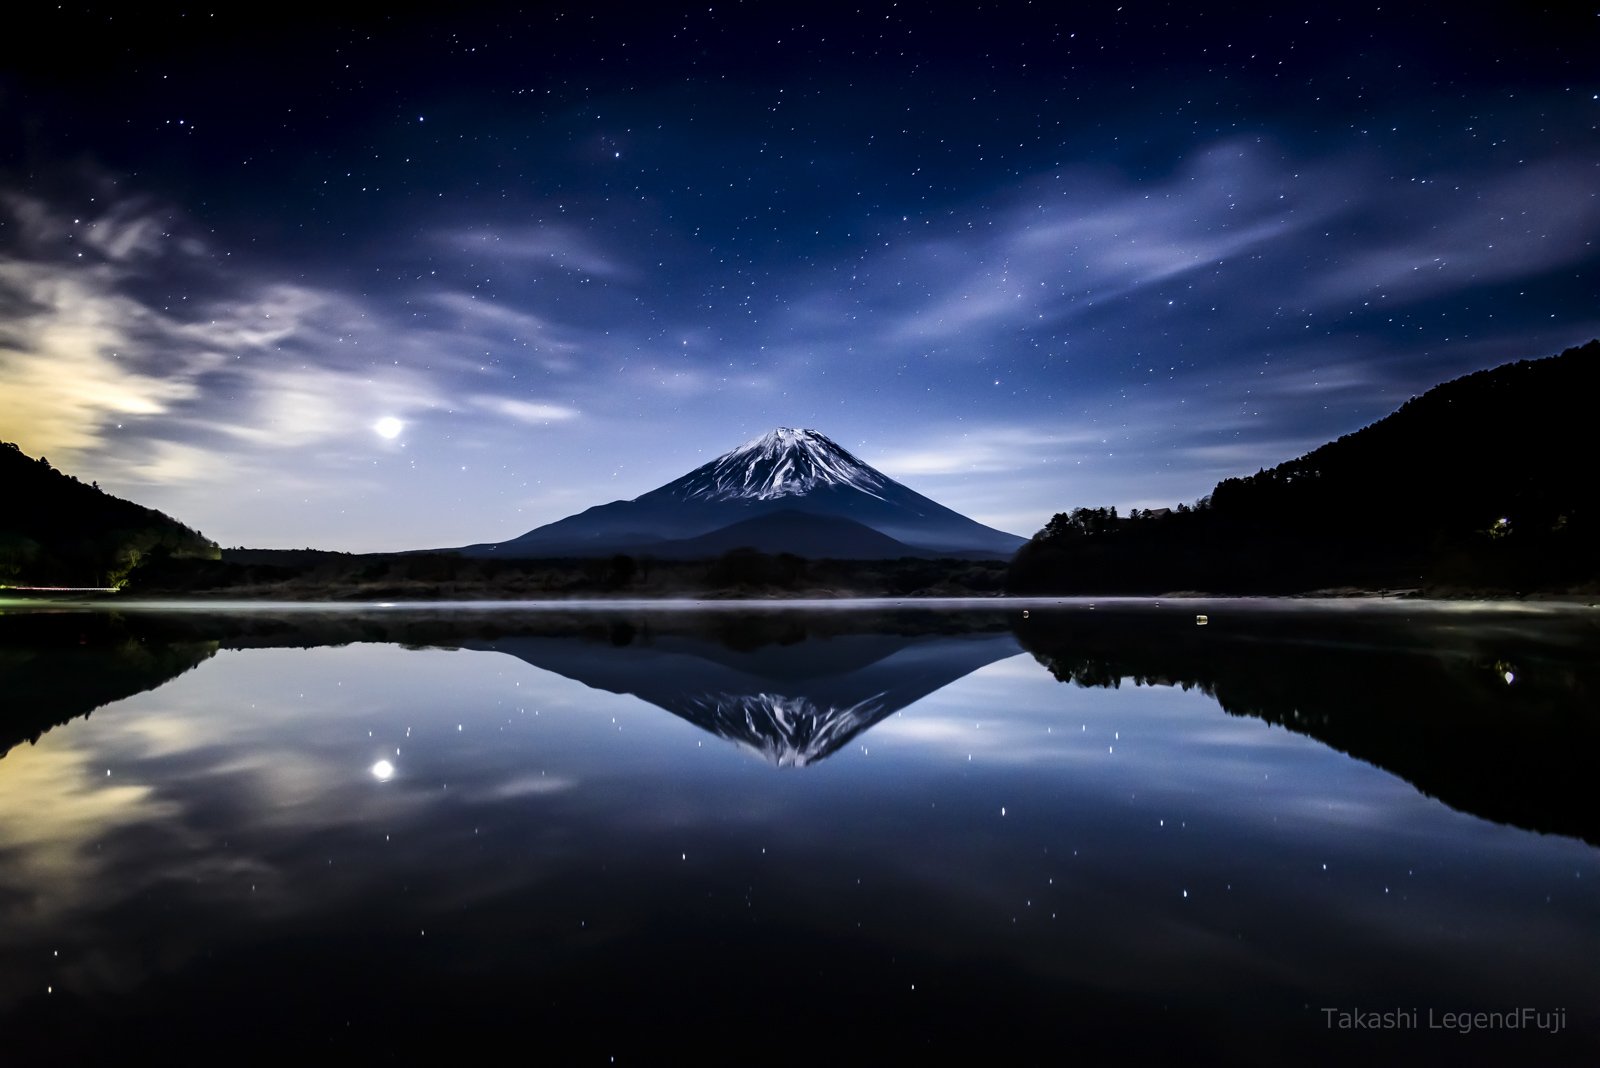 Fuji,mountain,Japan,lake, water,reflection,blue,sky,cloud,night,, Takashi